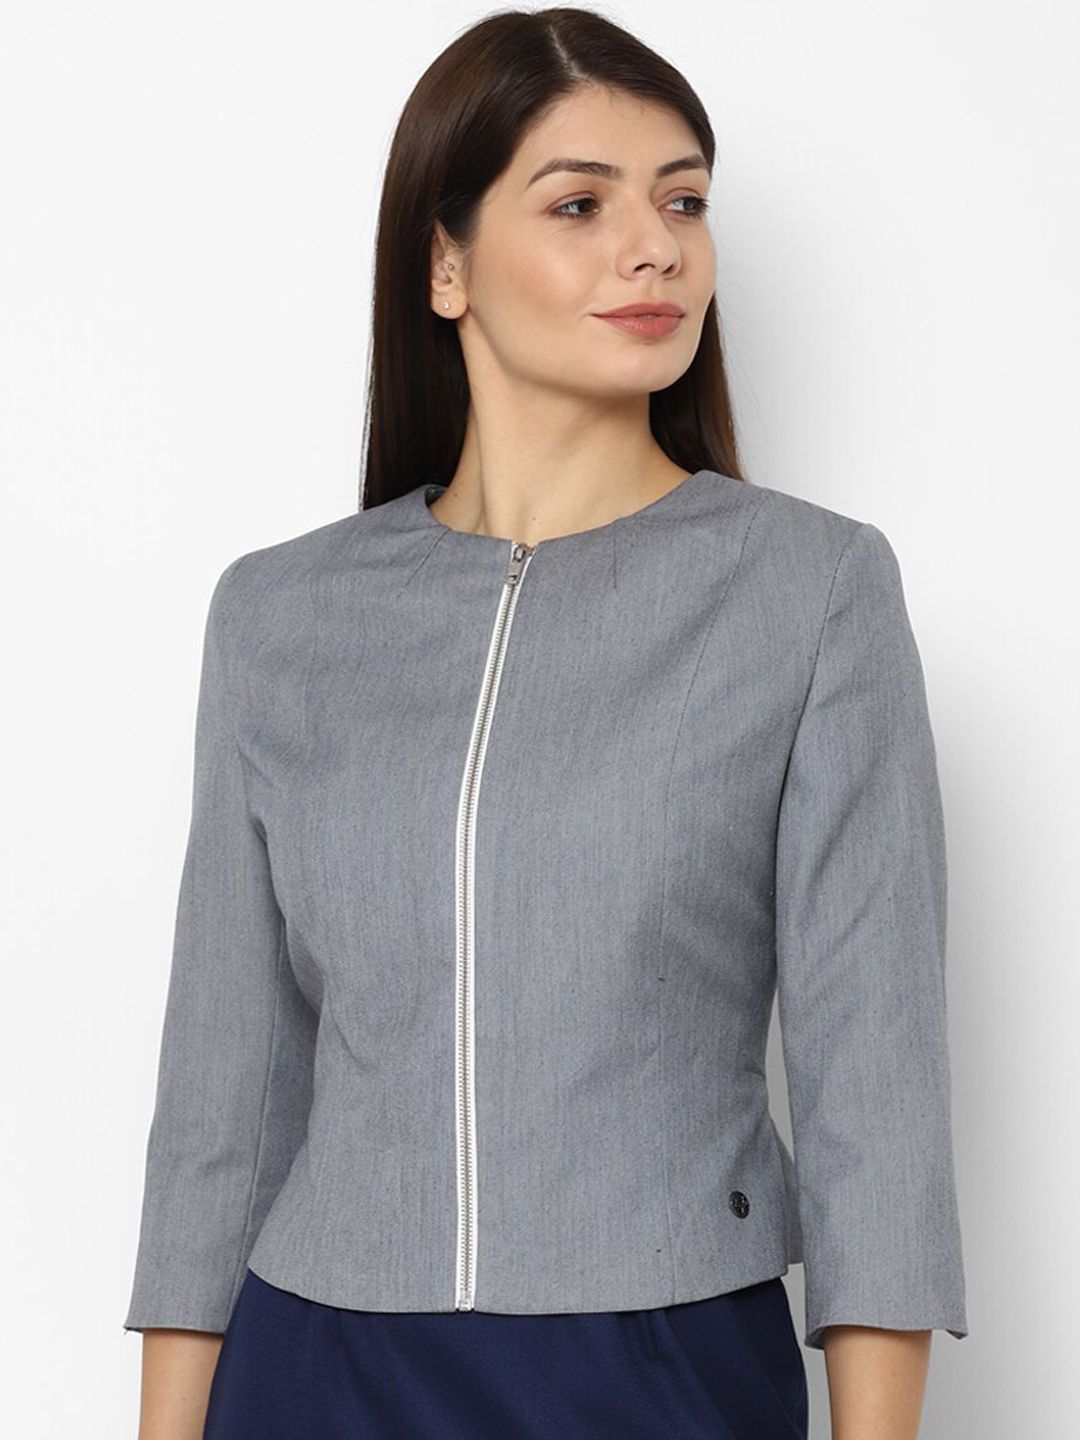 Allen Solly Woman Grey Formal Blazer Price in India